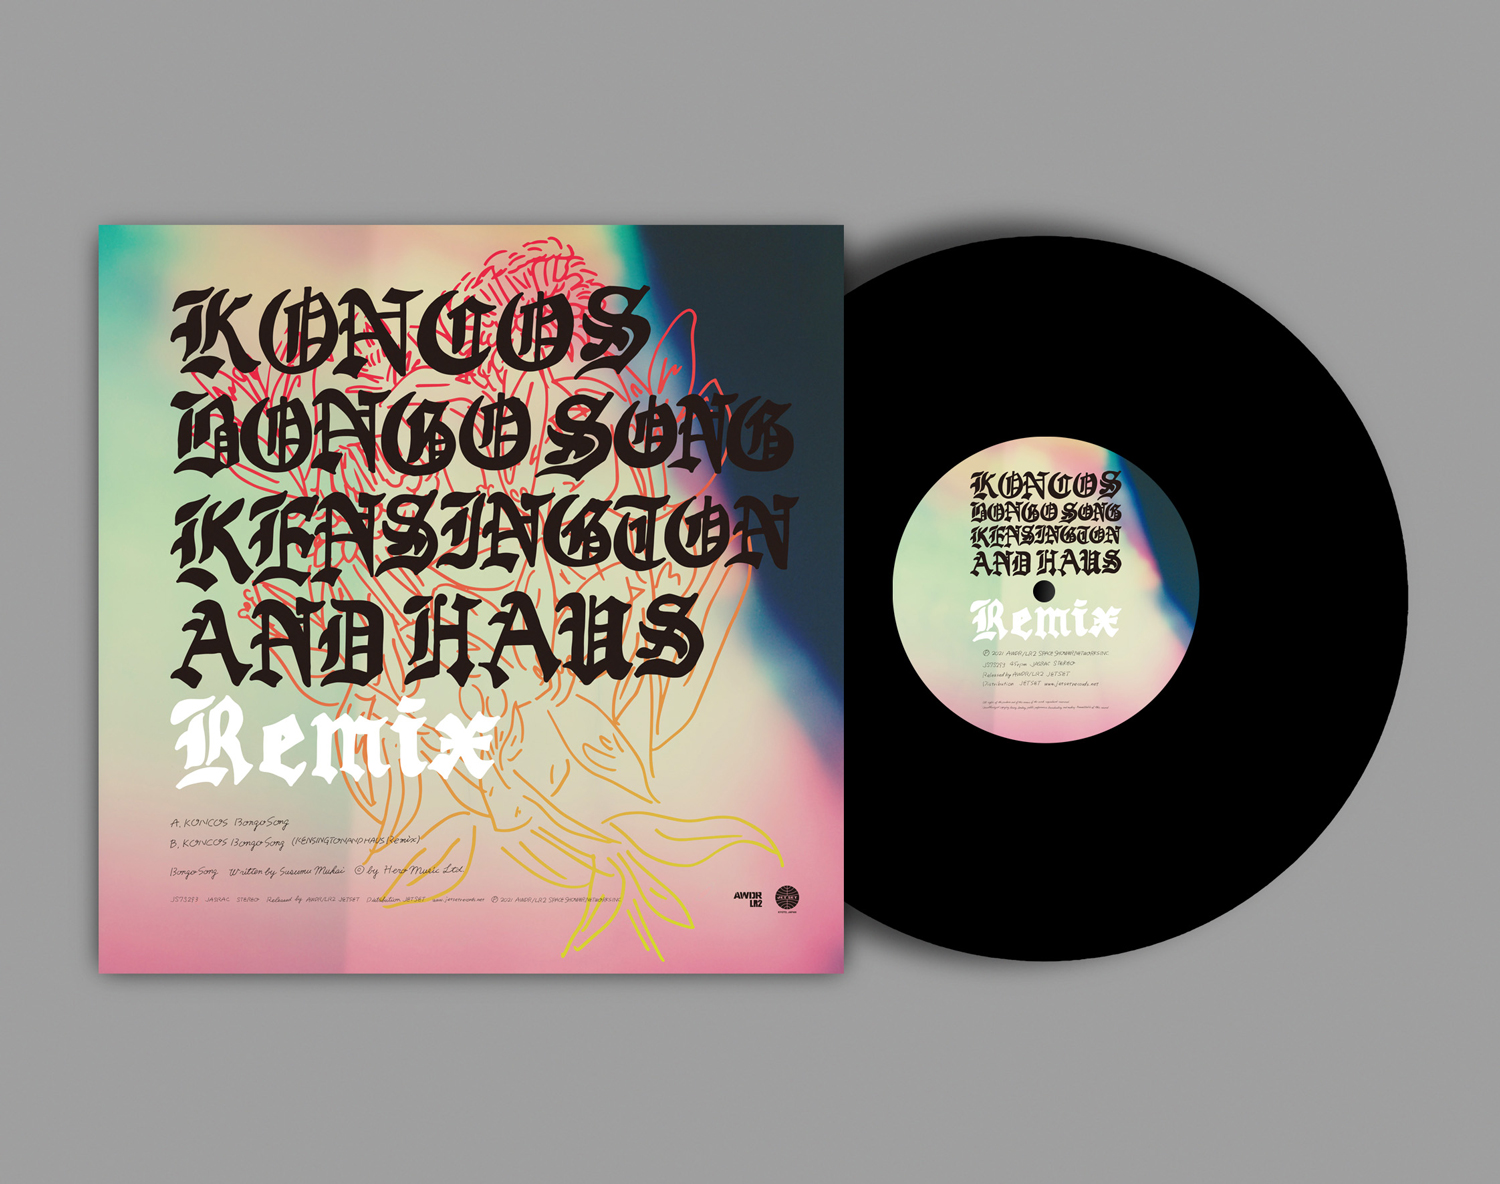 KONCOS『Bongo Song (KENSINGTON AND HAUS Remix) 』7" back